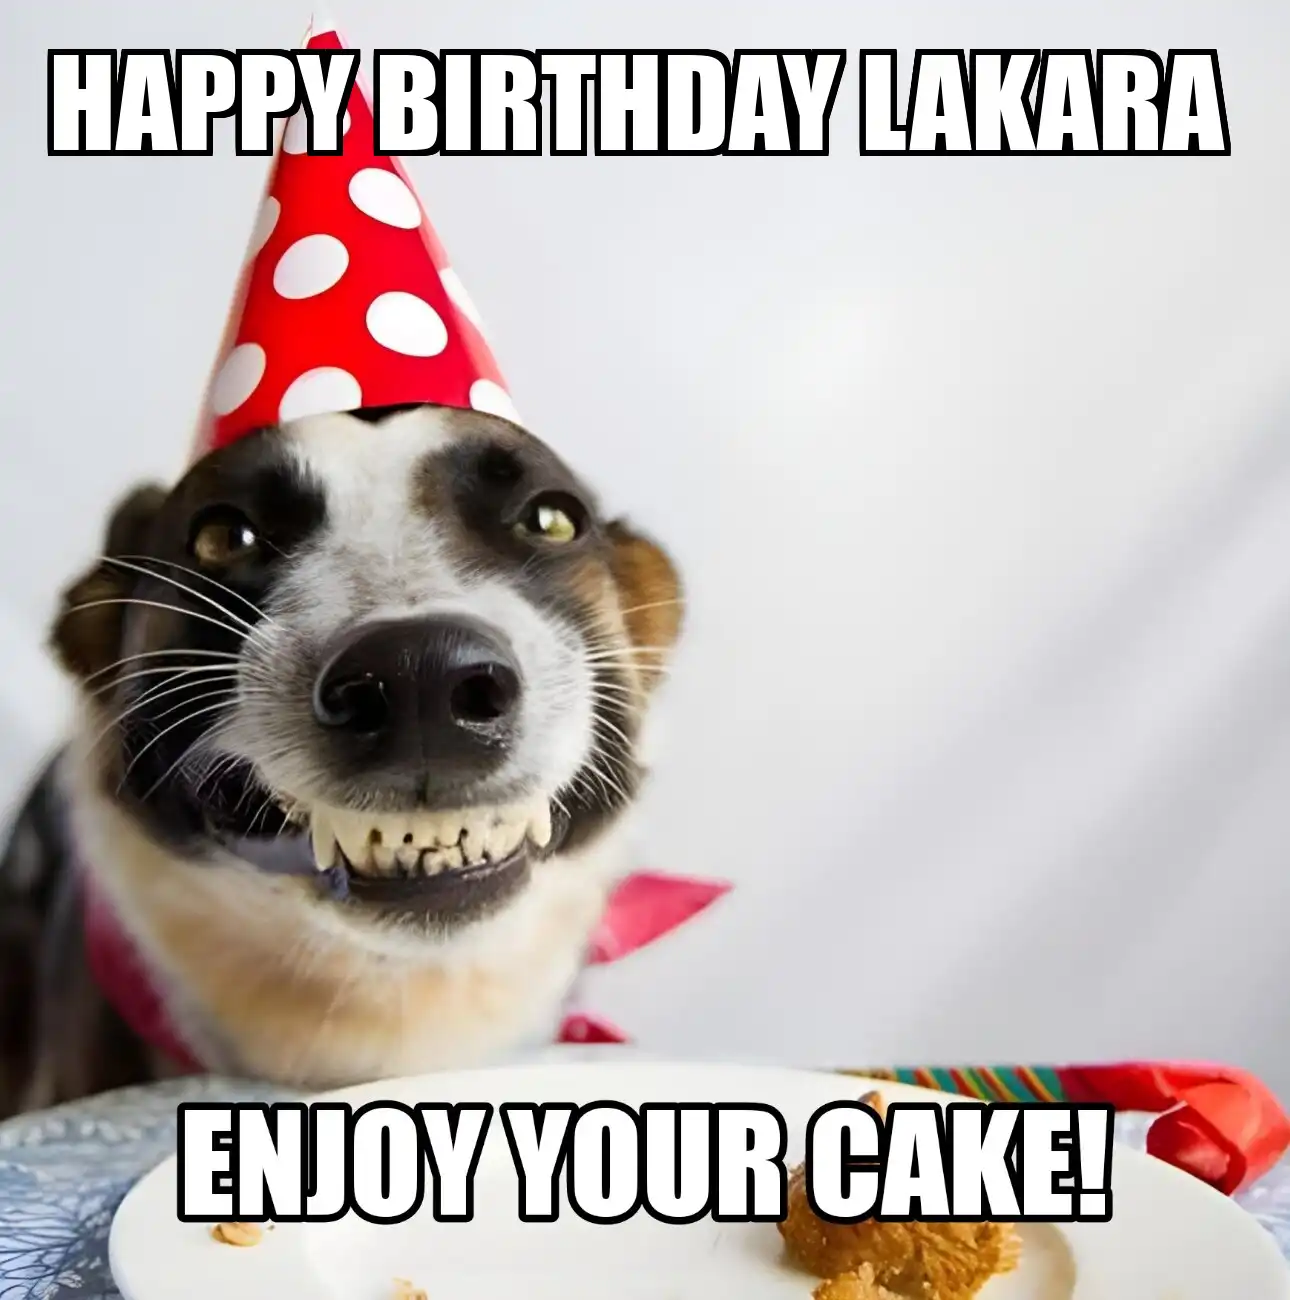 Happy Birthday Lakara Enjoy Your Cake Dog Meme